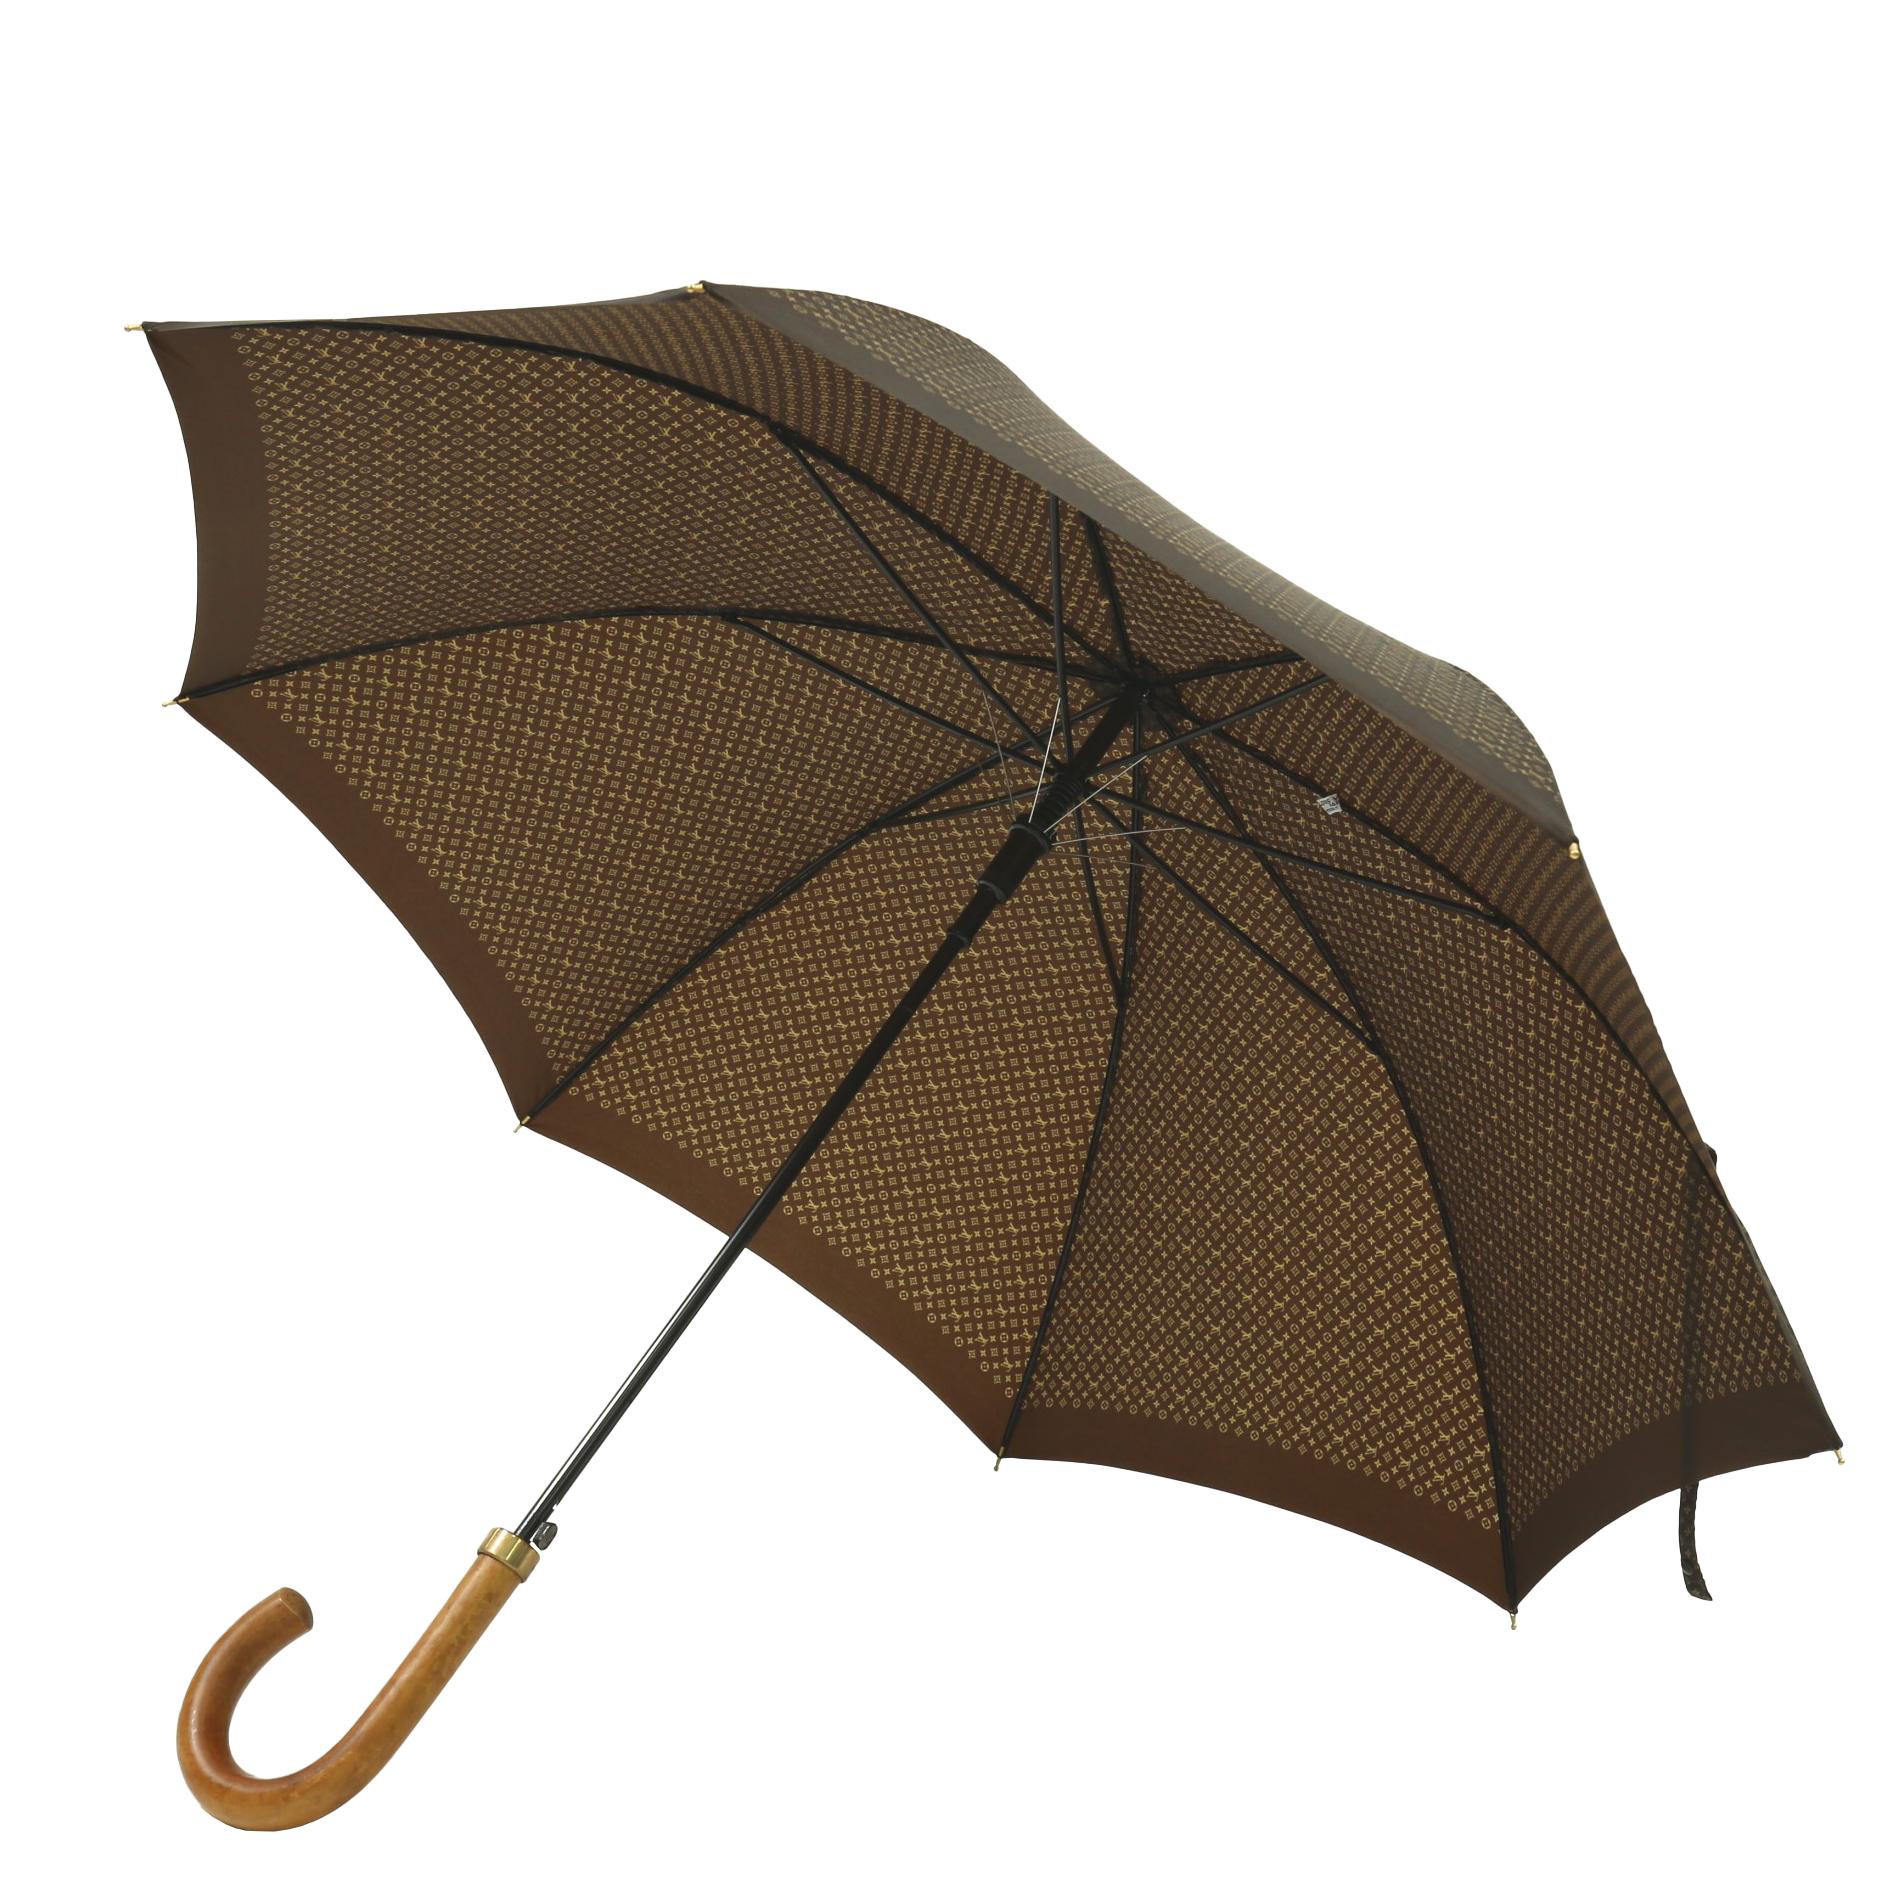 LOUIS VUITTON umbrella ONDÉES. Monogram series in brow…